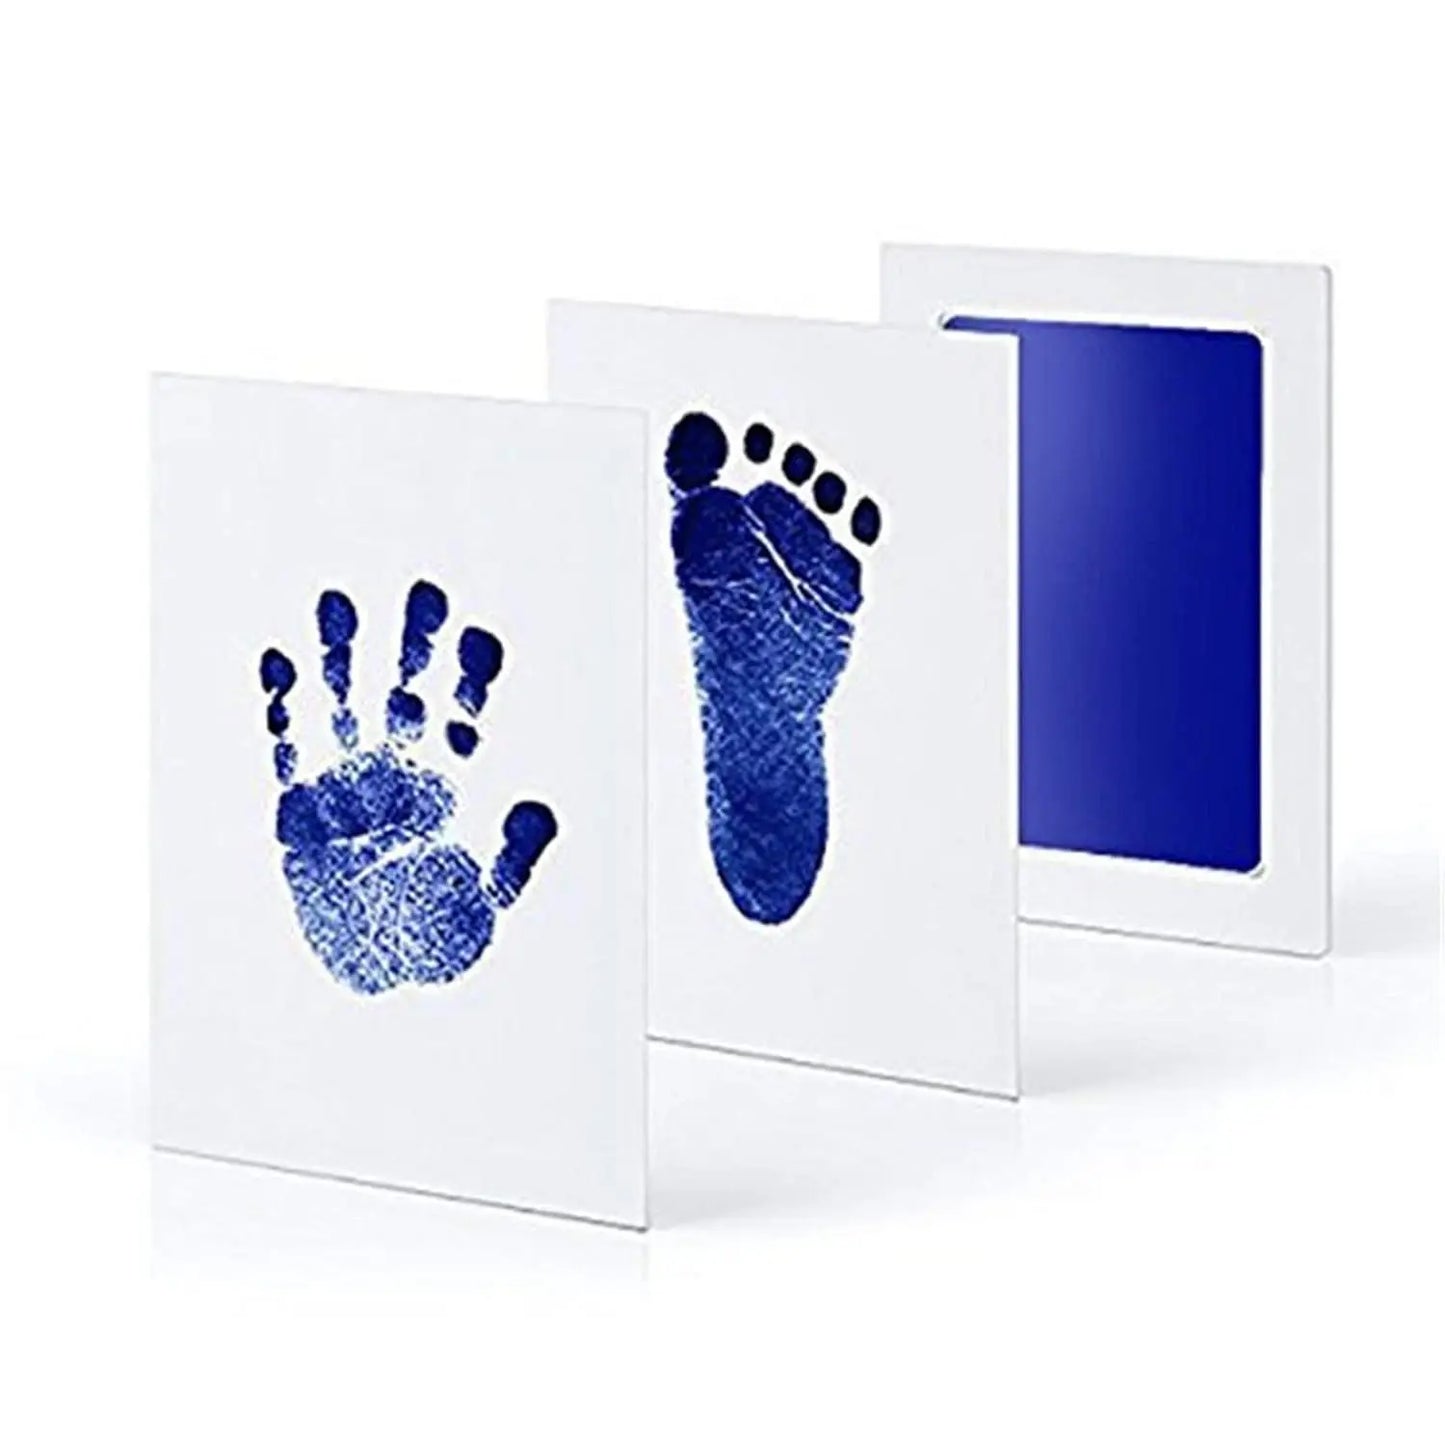 Hand & Foot Print Kit - 2 pack - babies-mall.shop Blue